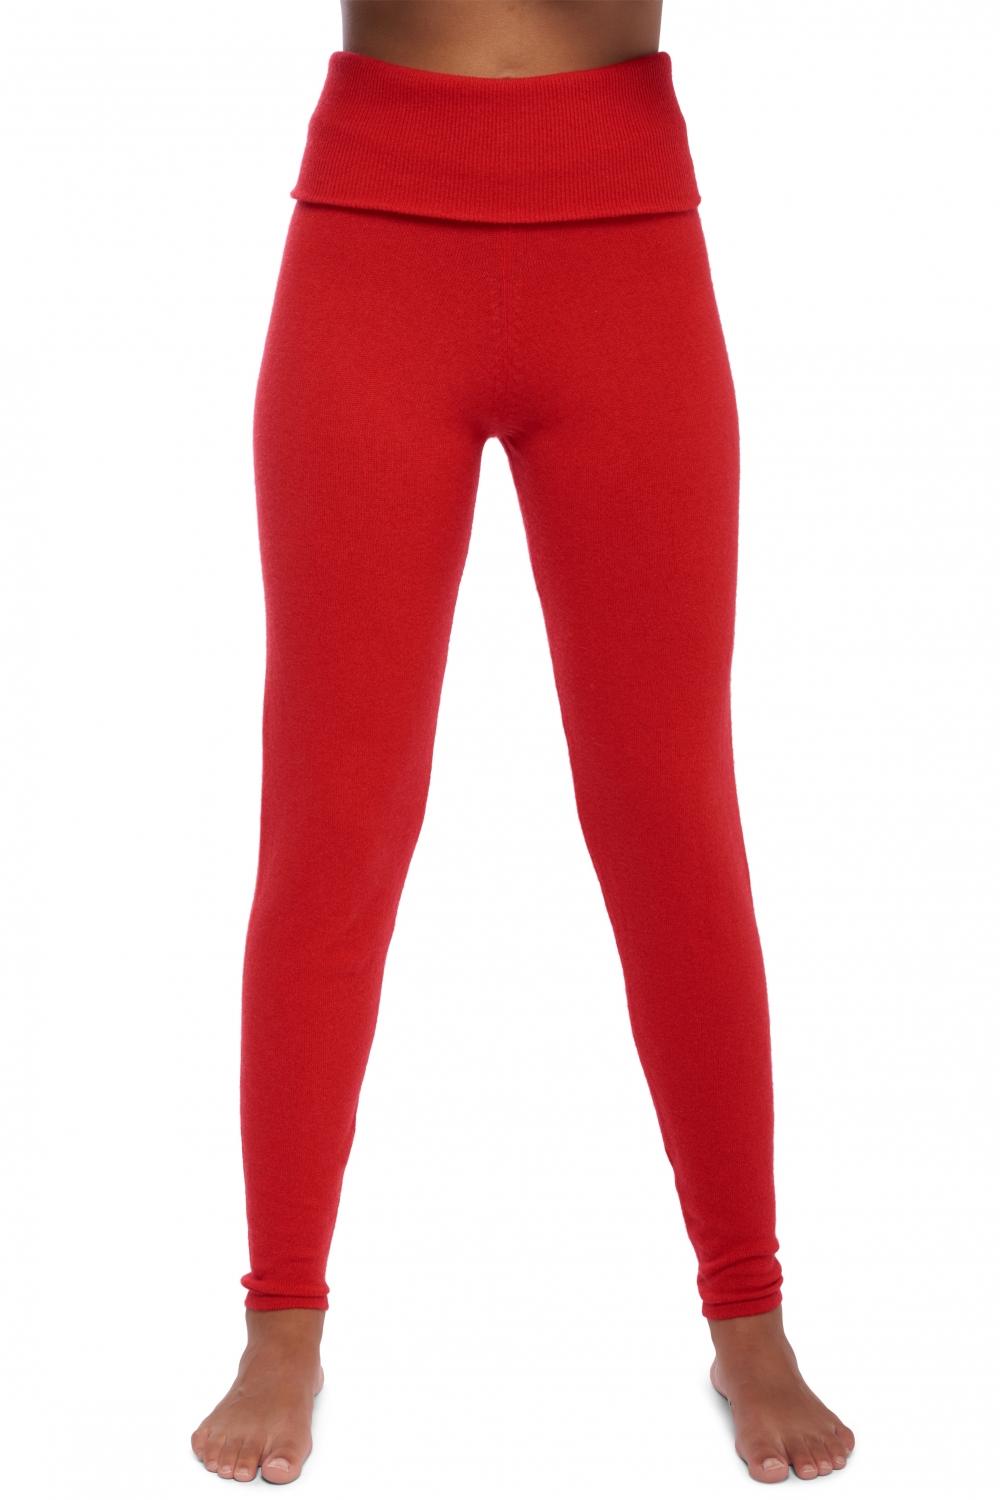 Cashmere accessori shirley rouge 2xl